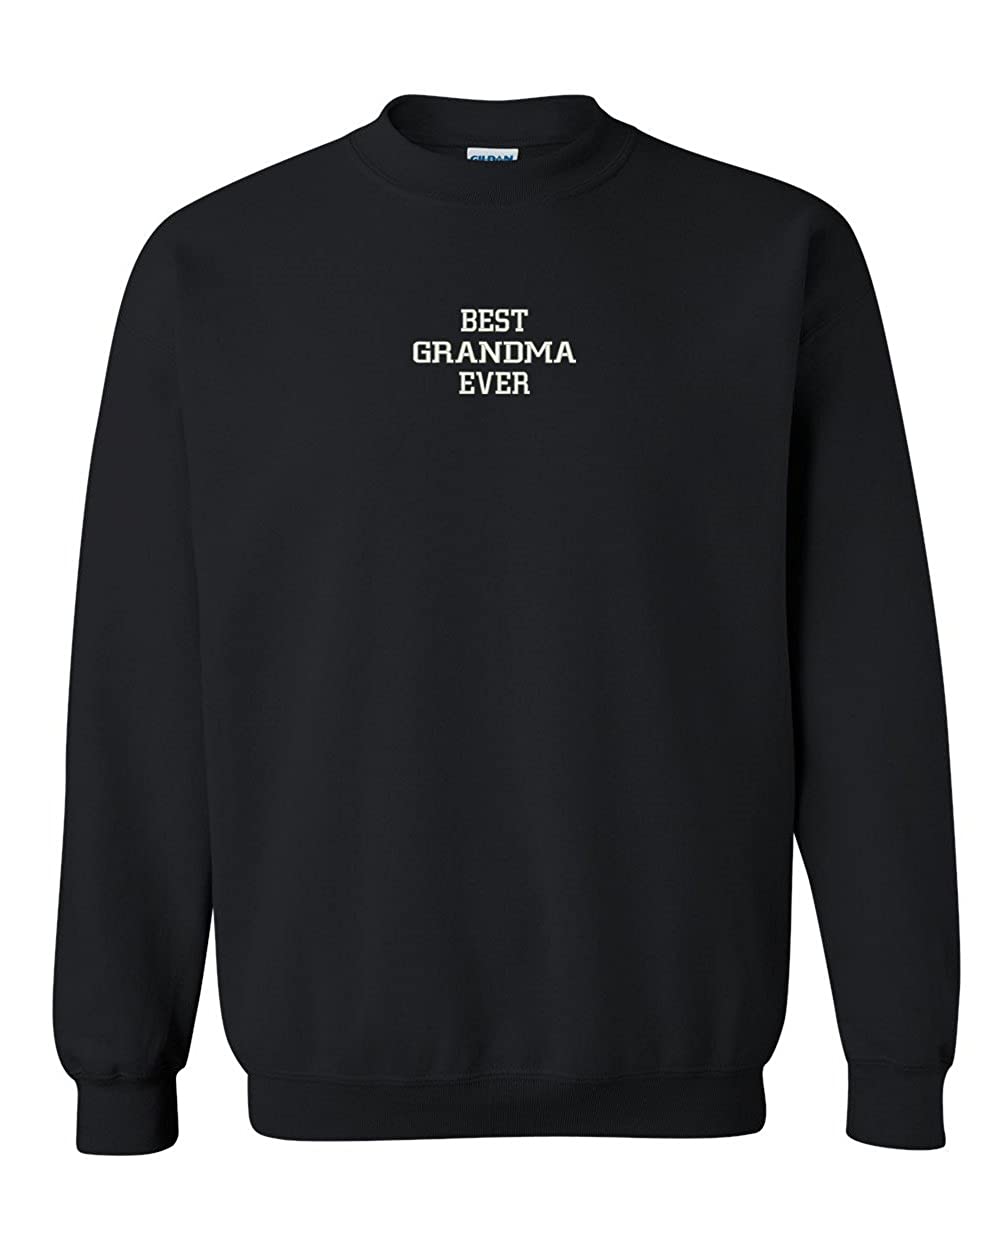 Trendy Apparel Shop Best Grandma Ever Embroidered Crewneck Sweatshirt